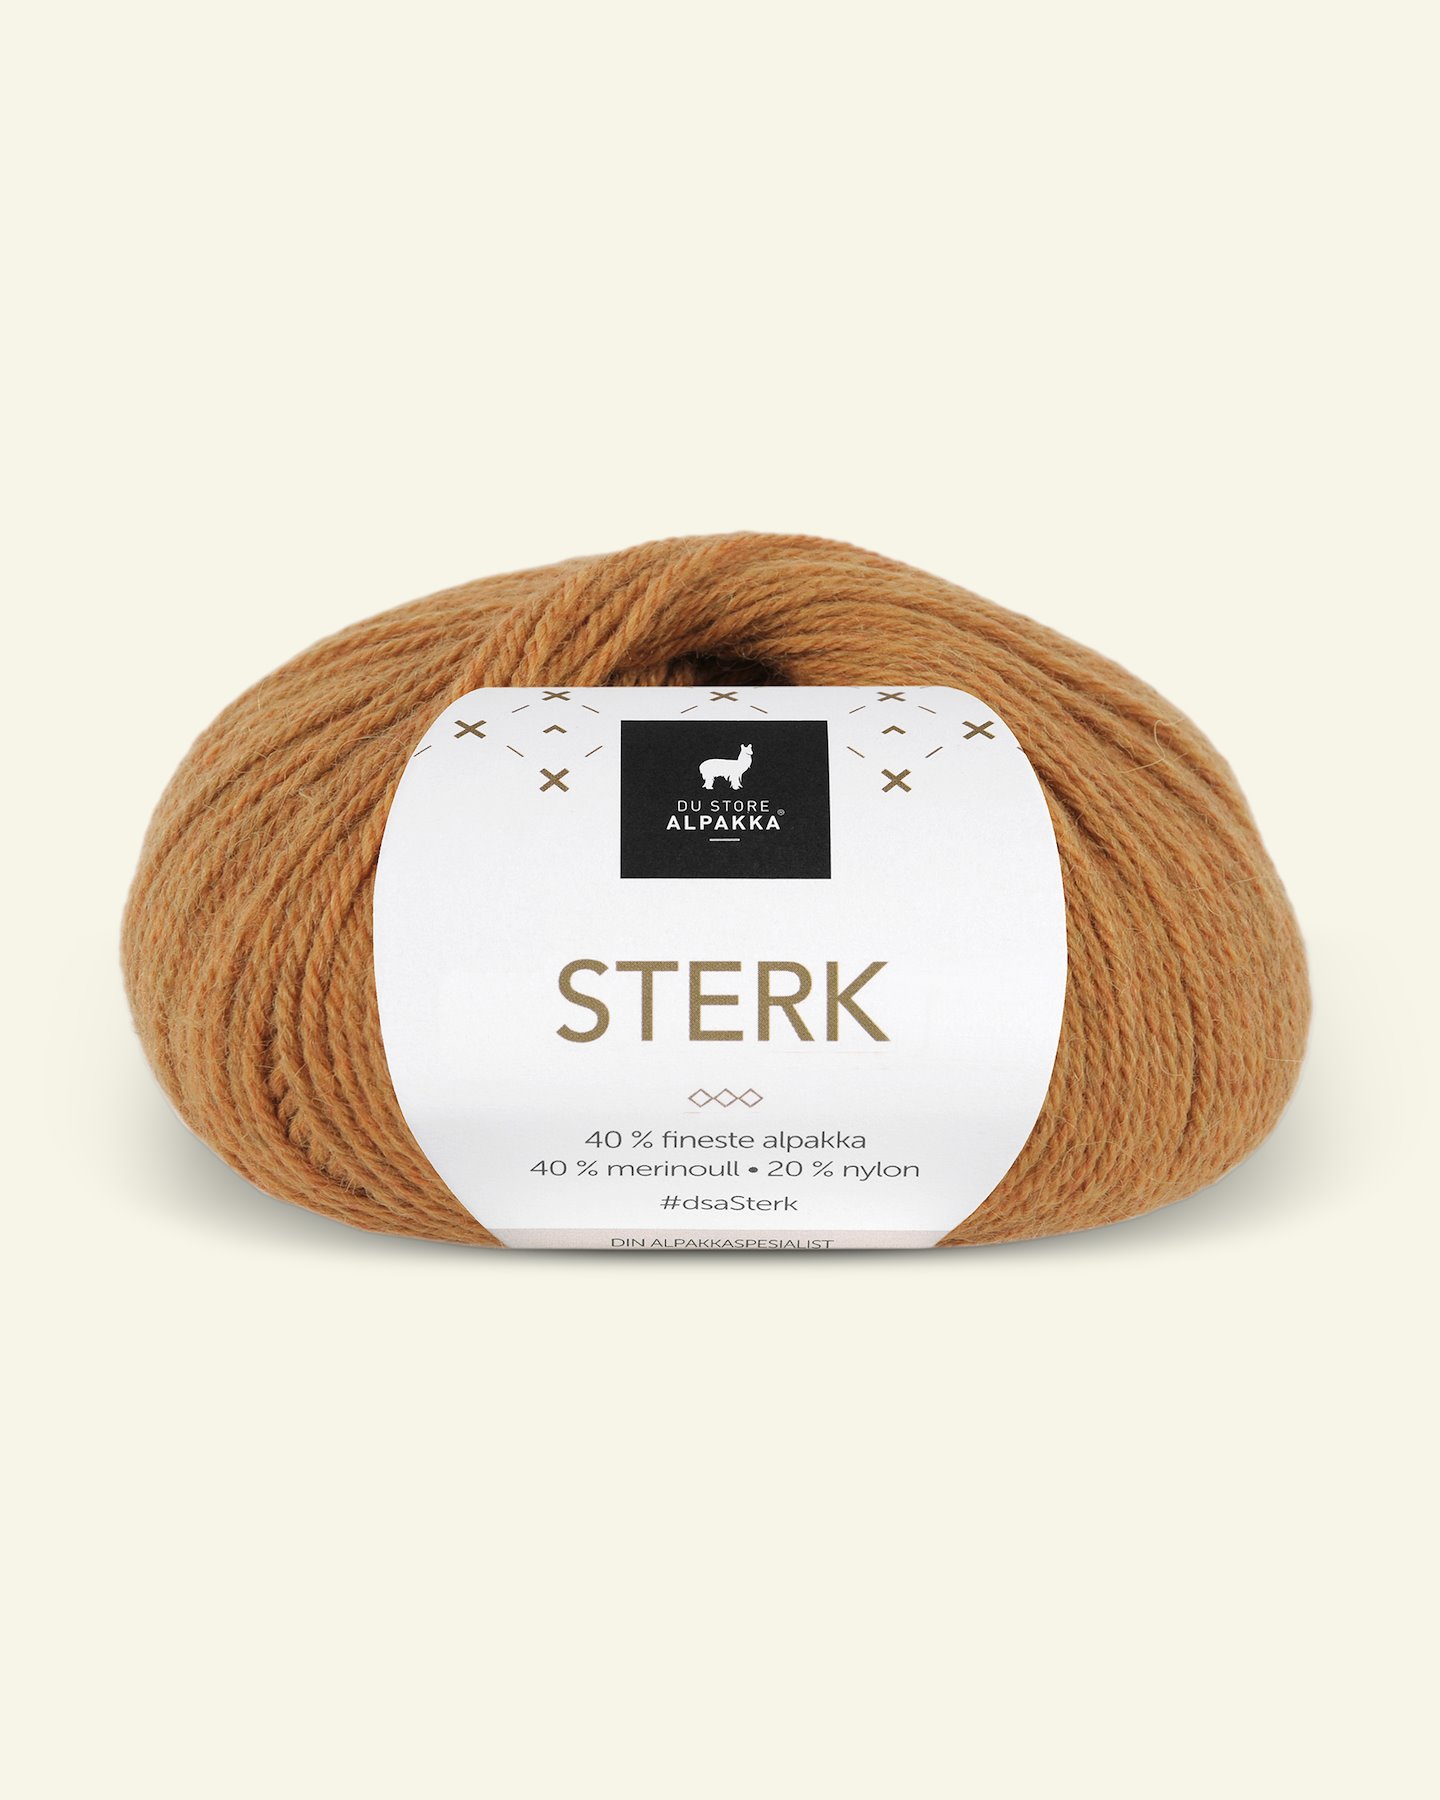 Du Store Alpakka, alpaca merino mixed yarn "Sterk", dark curry mel. (877) 90000686_pack